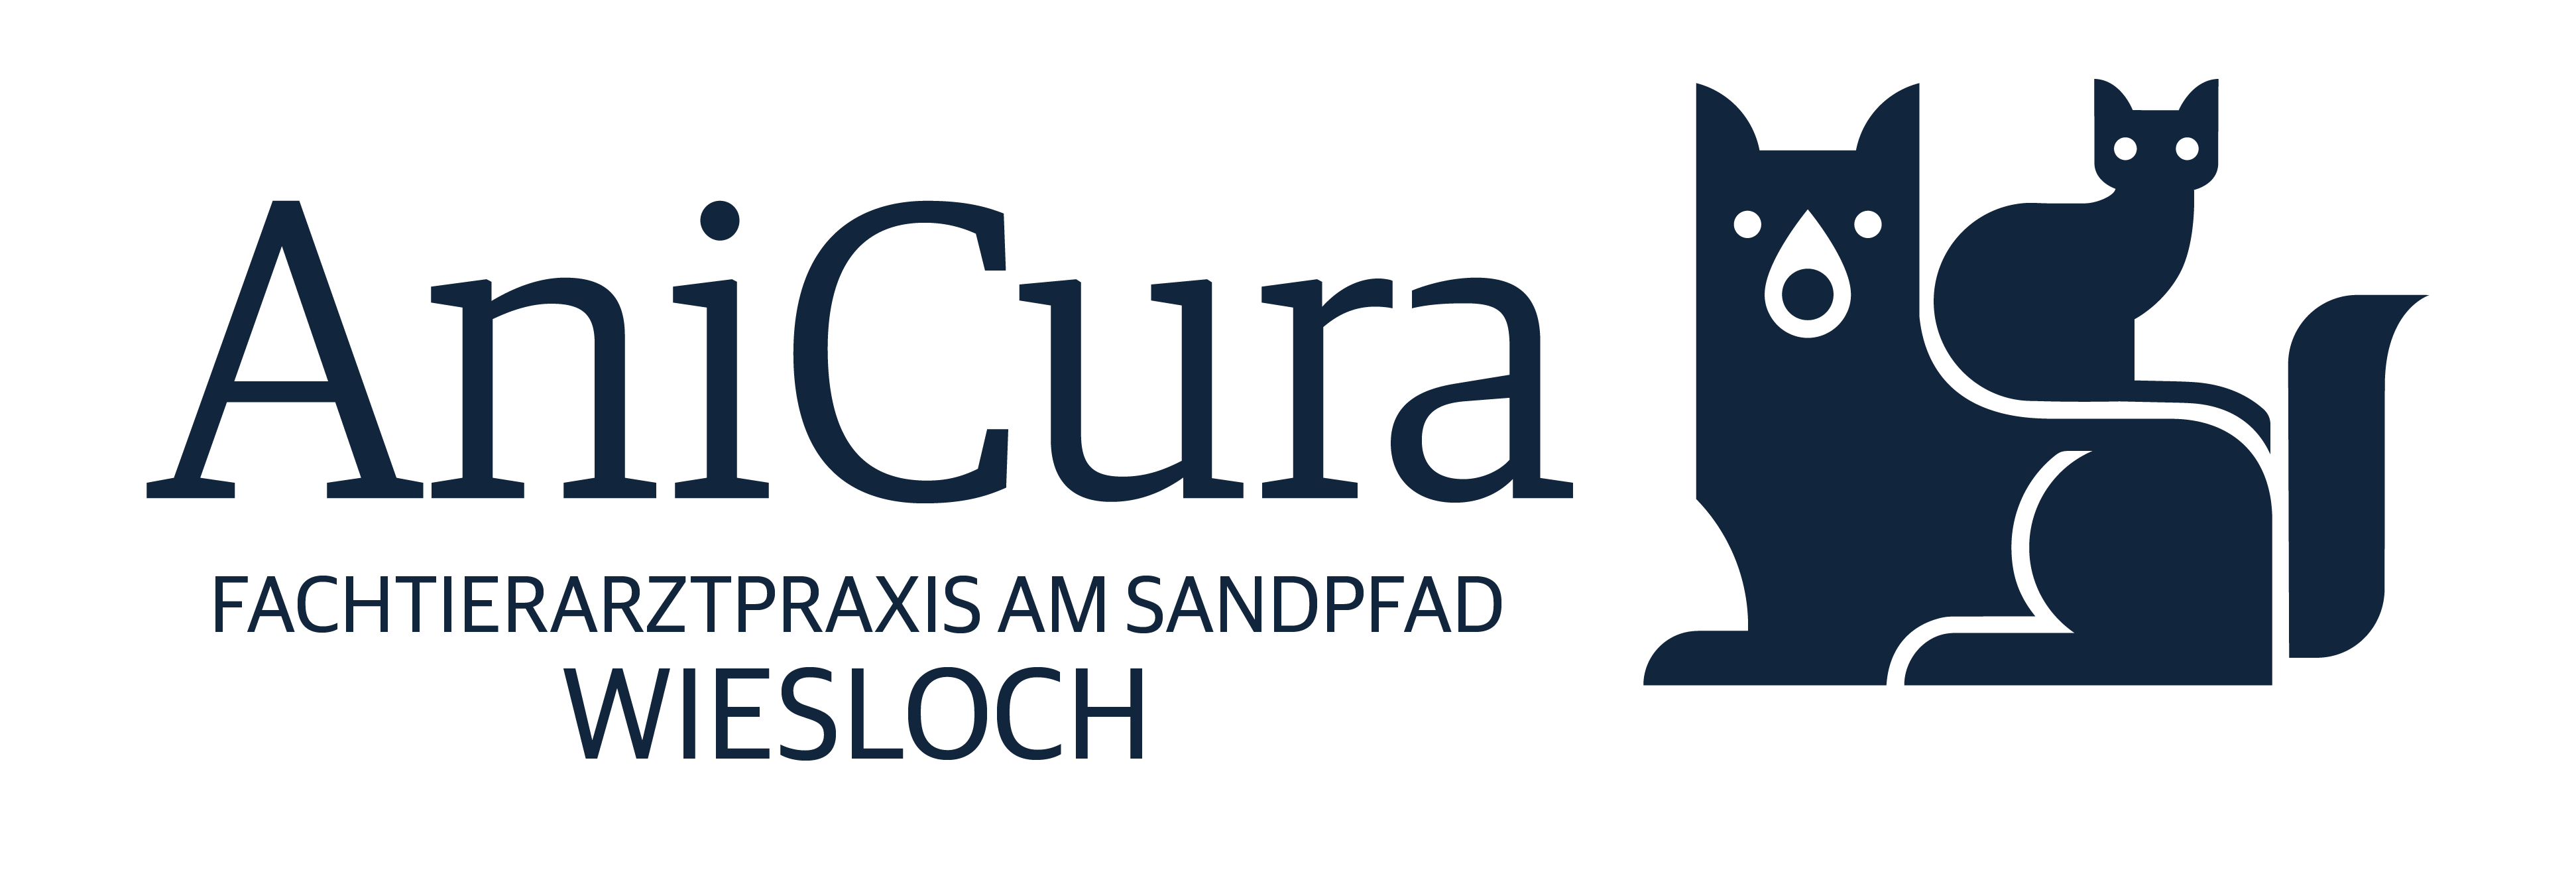 AniCura Wiesloch logo